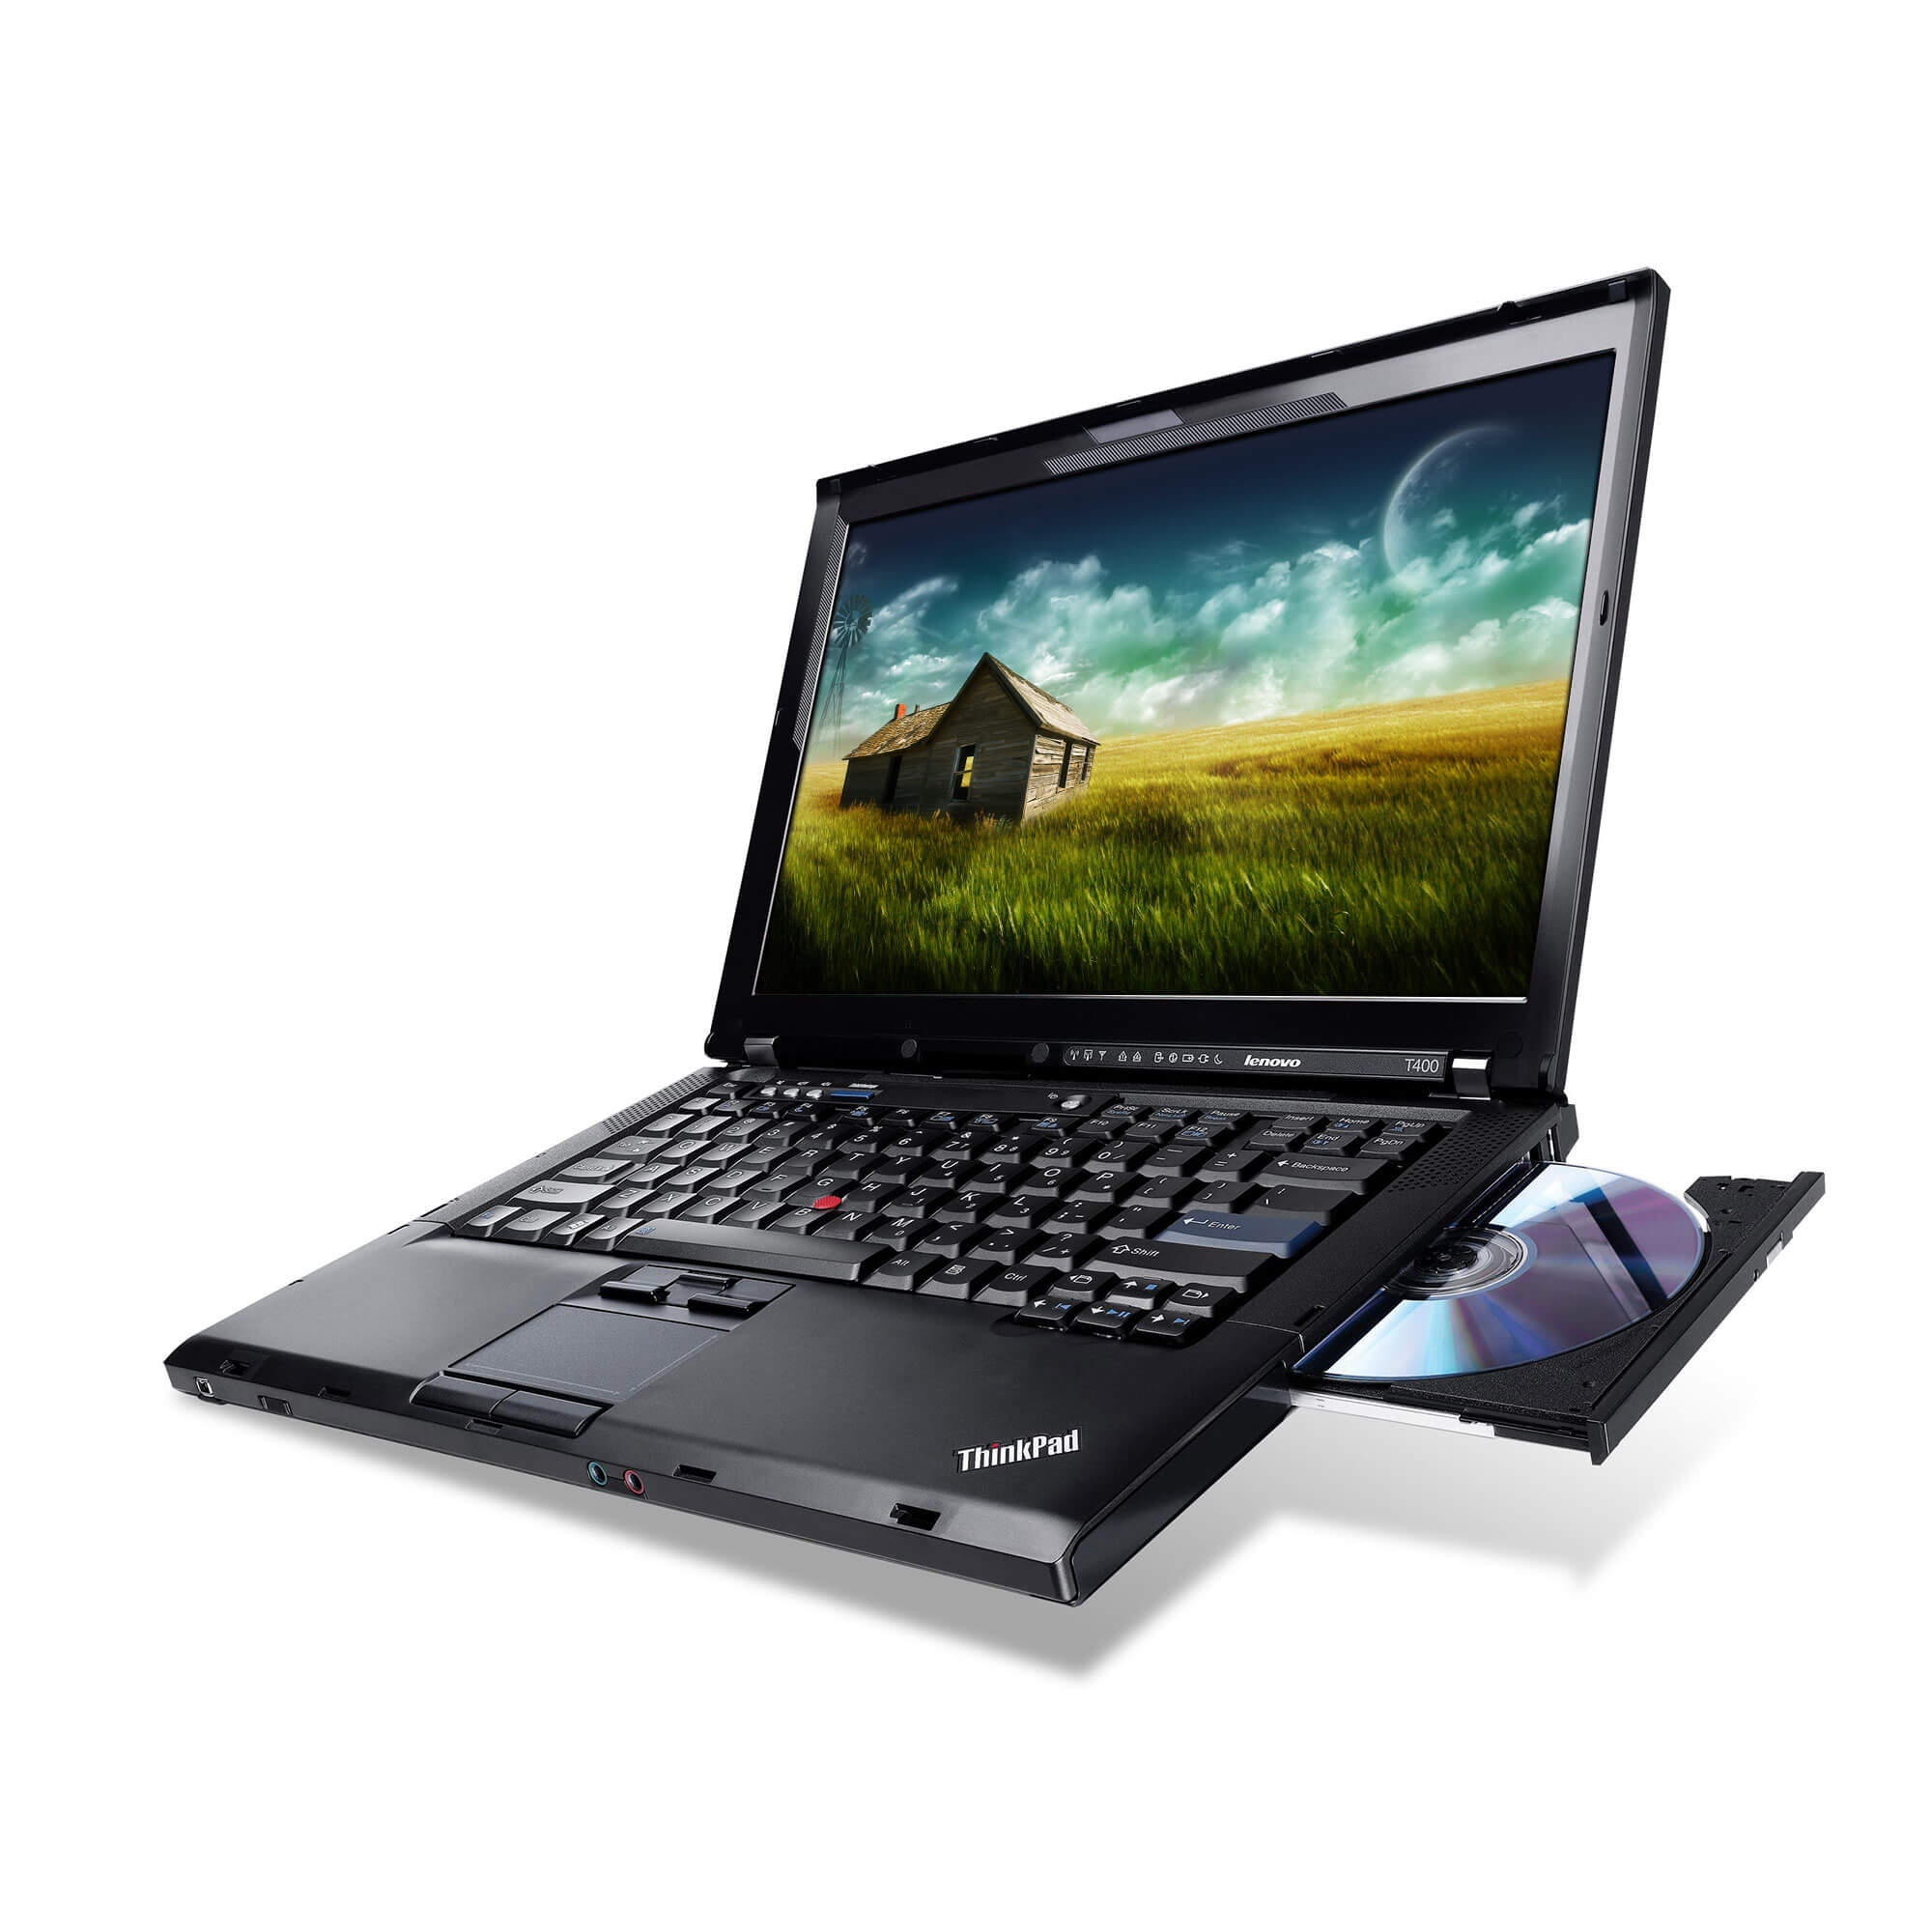 Lenovo ThinkPad T400  Refurbished PC365